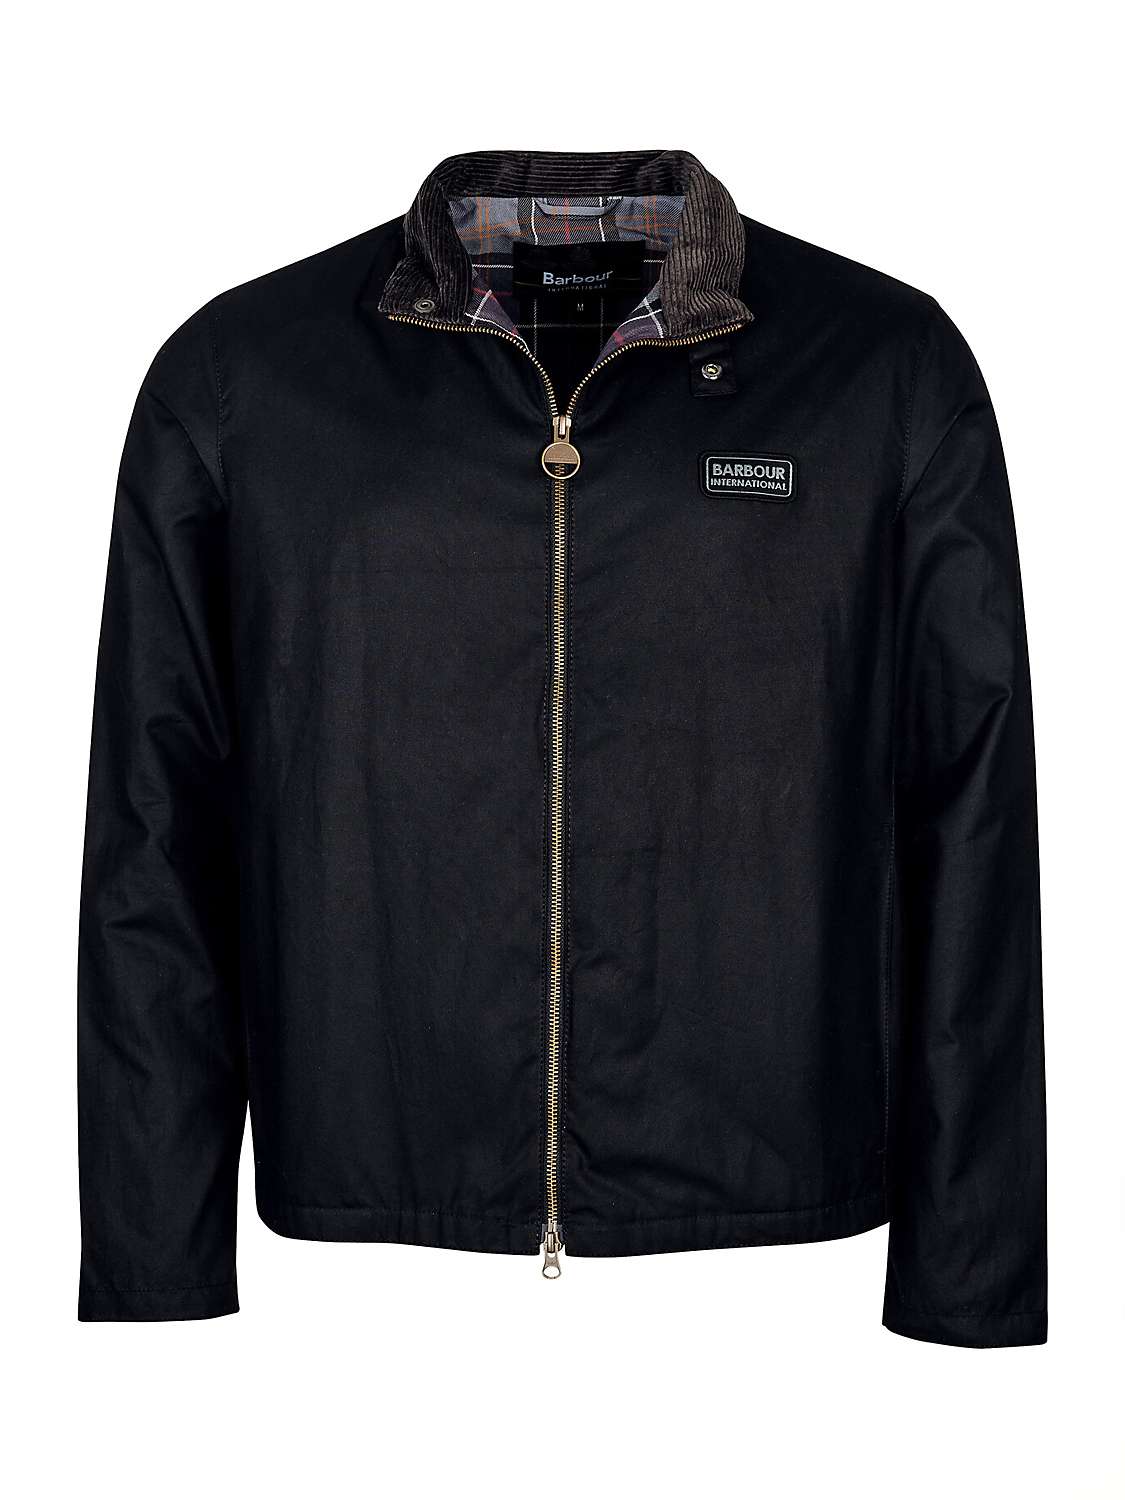 Buy Barbour International Short Waxed Jacket, Black Online at johnlewis.com